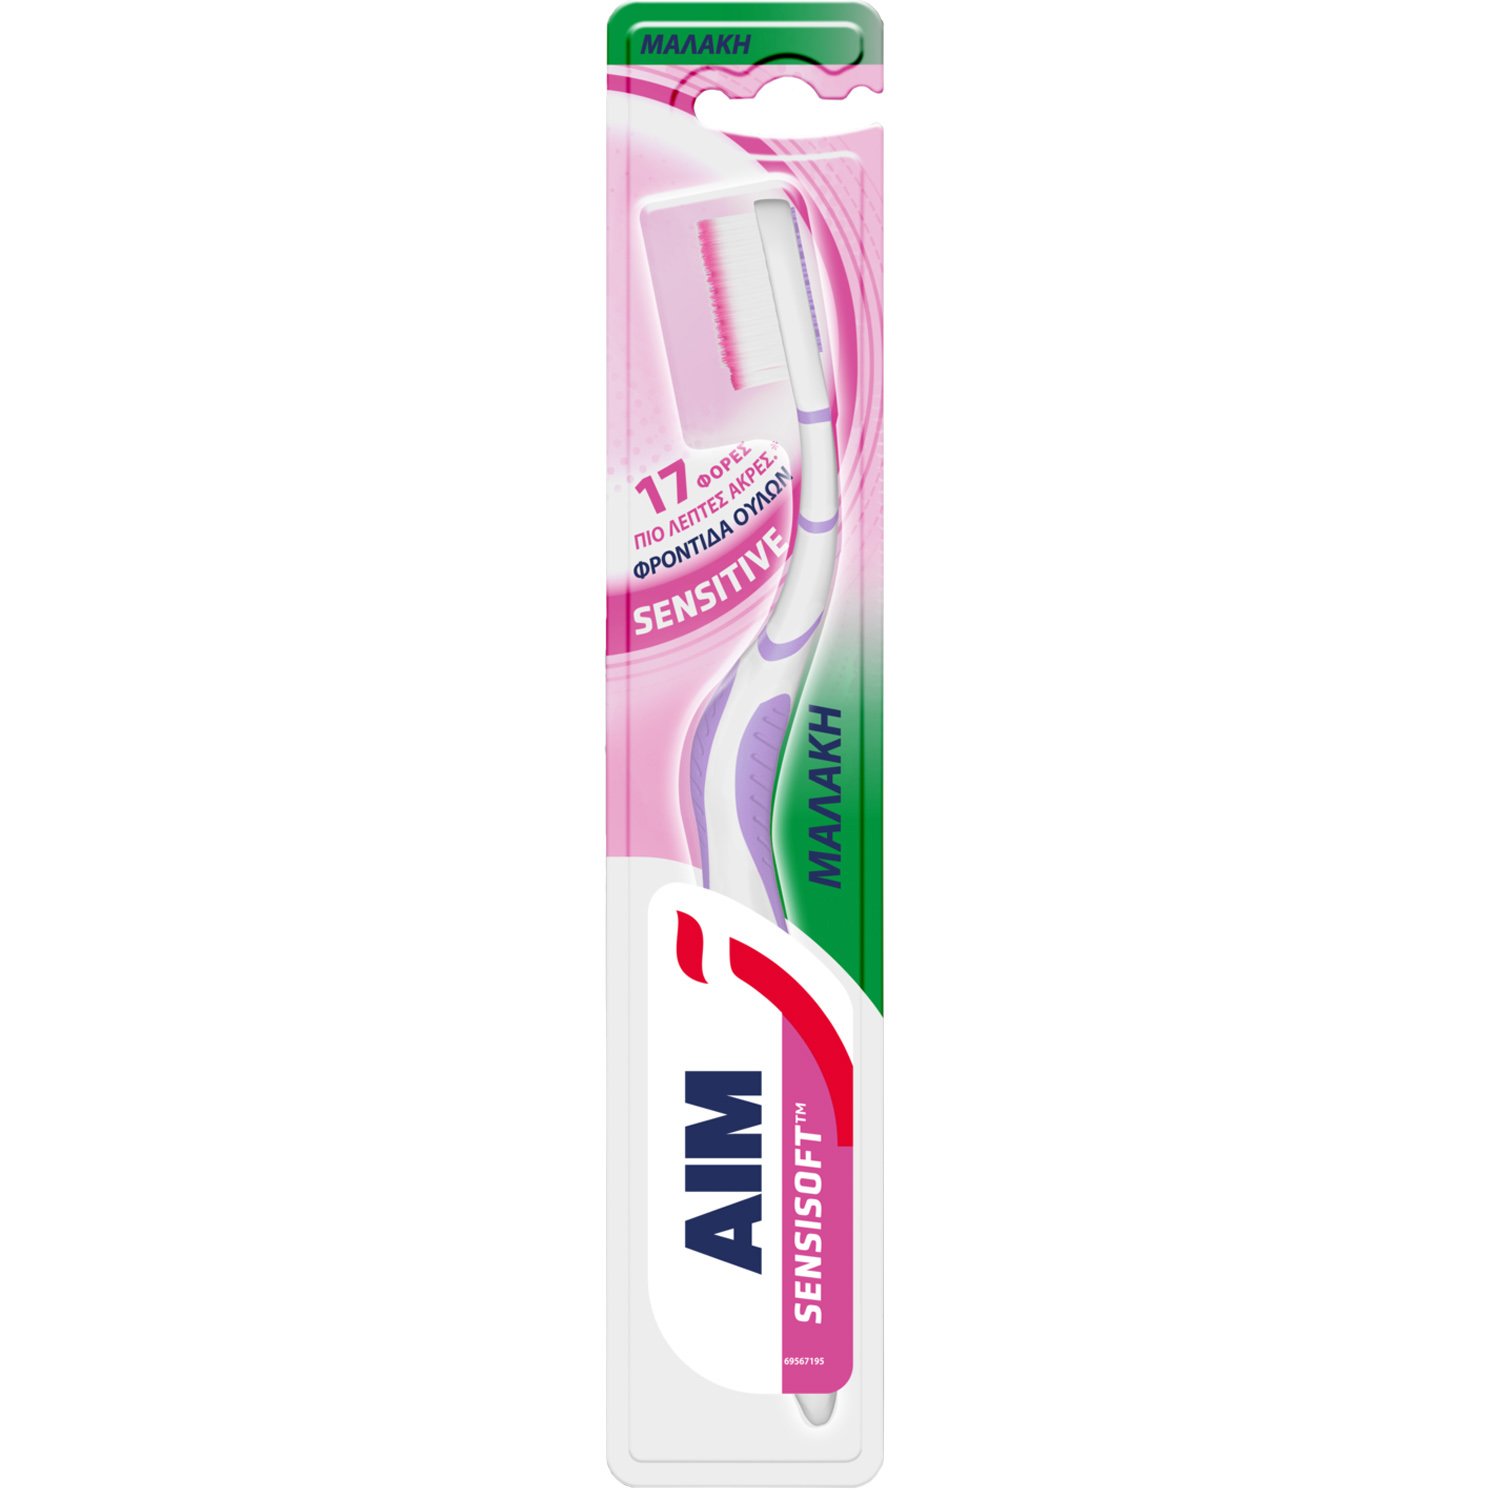 Aim Sensisoft Sensitive Toothbrush Χειροκίνητη Μαλακή Οδοντόβουρτσα με 17 Φορές πιο Λεπτές Άκρες για τη Φροντίδα των Ούλων 1 Τεμάχιο – Μωβ / Ροζ